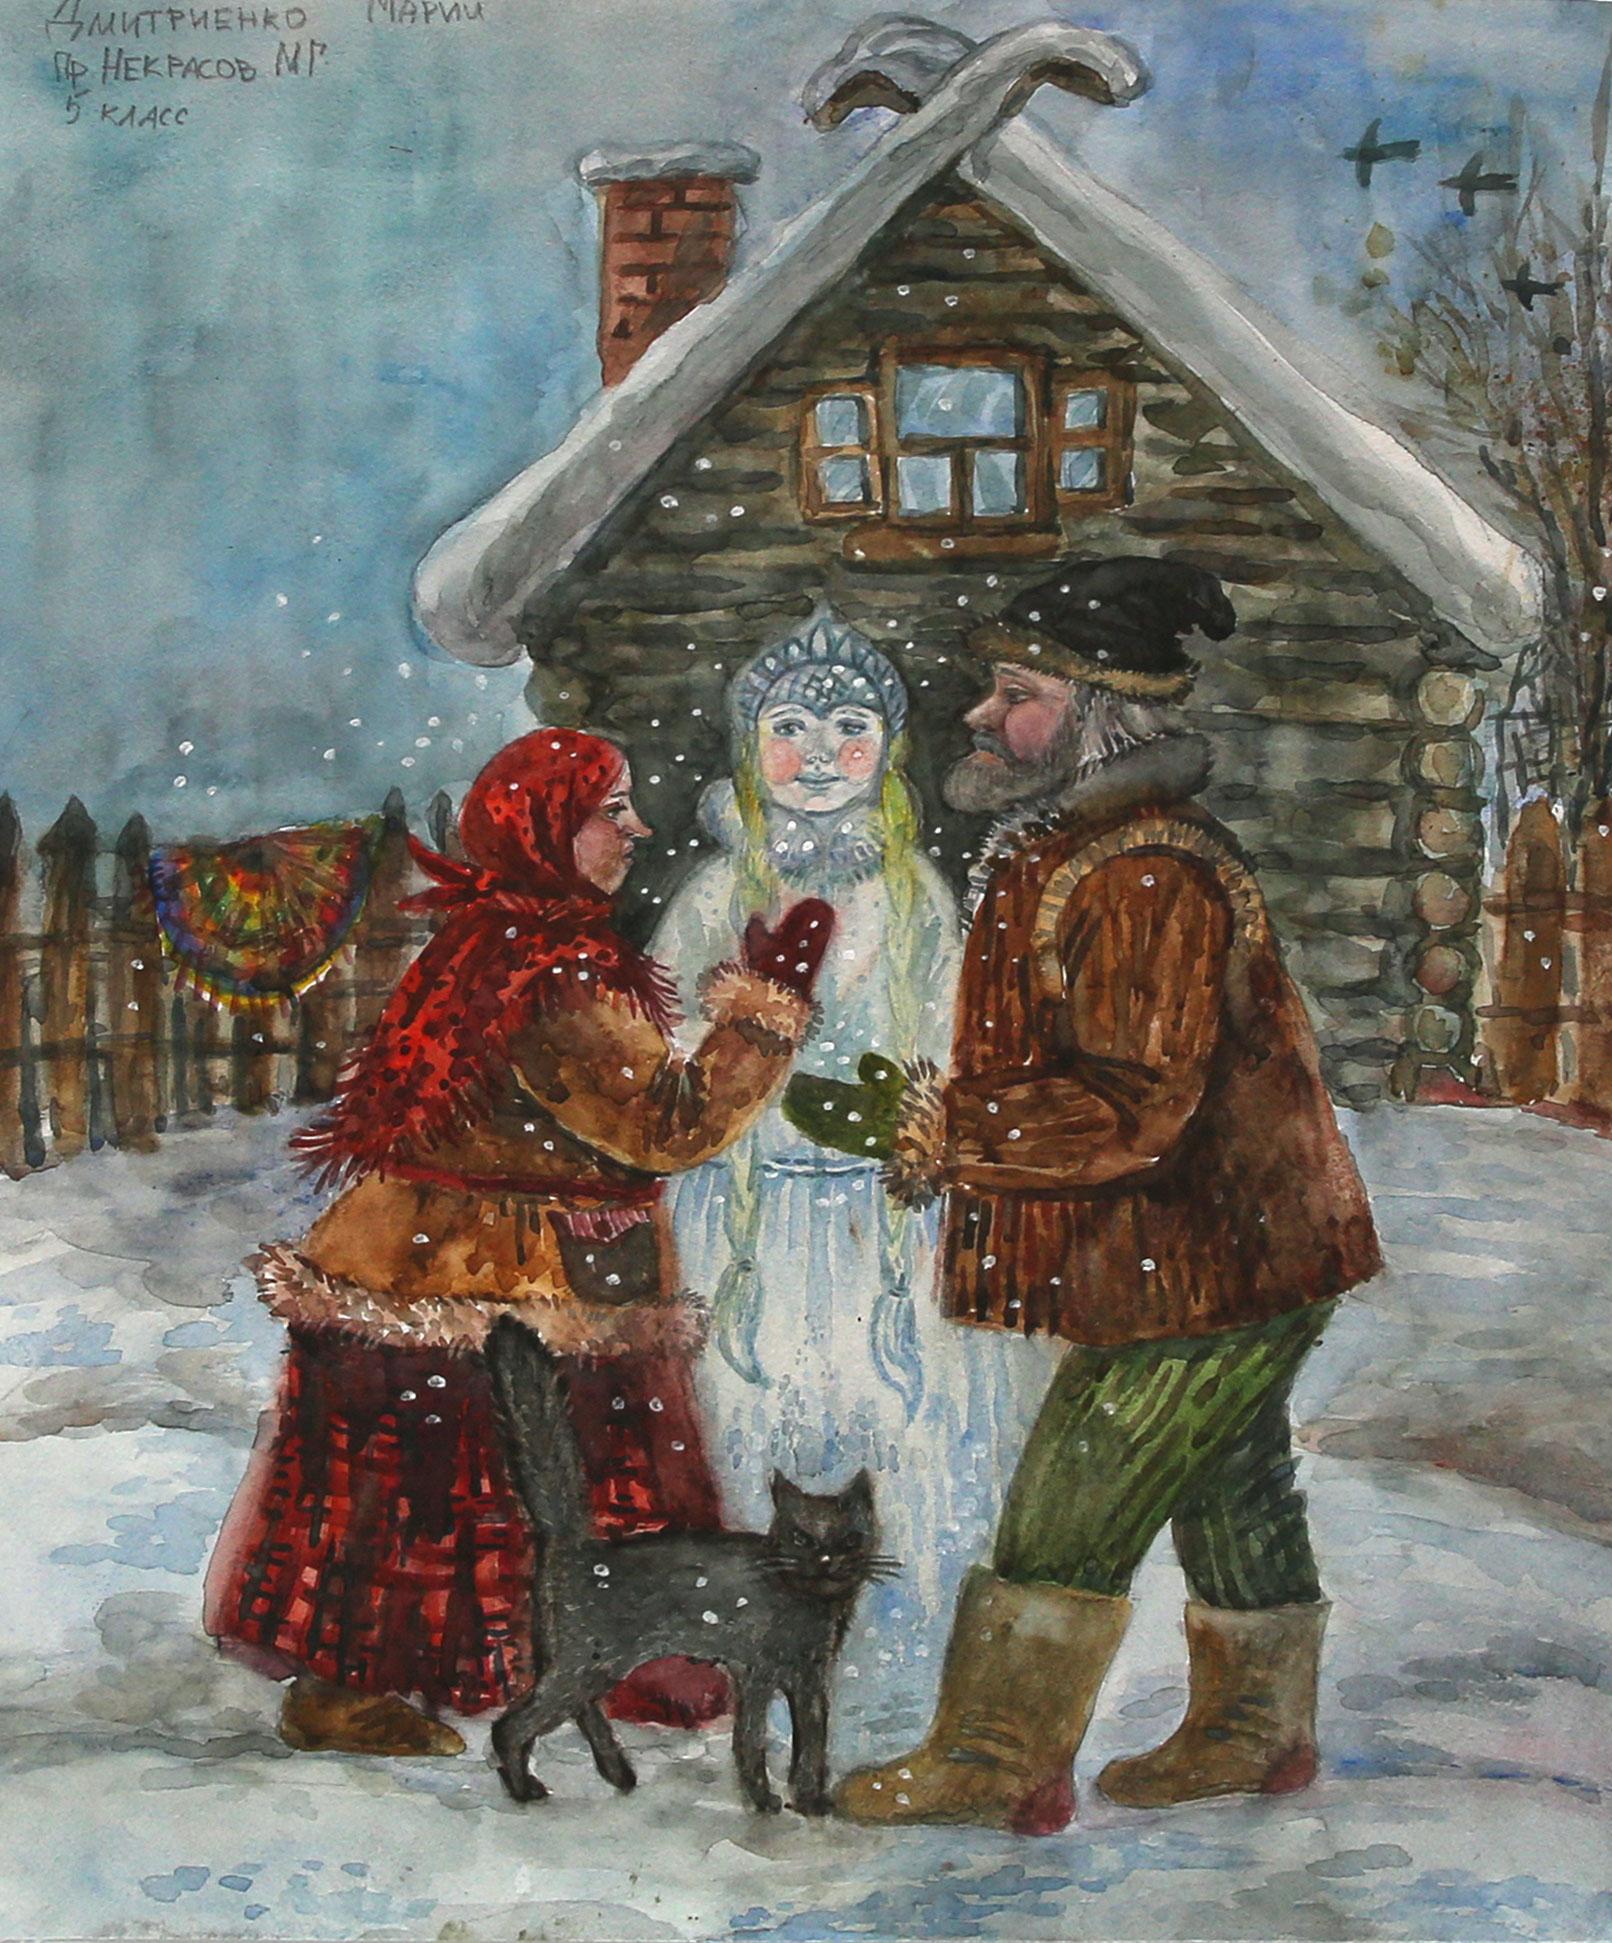 Дмитриенко М.. Original modern art painting